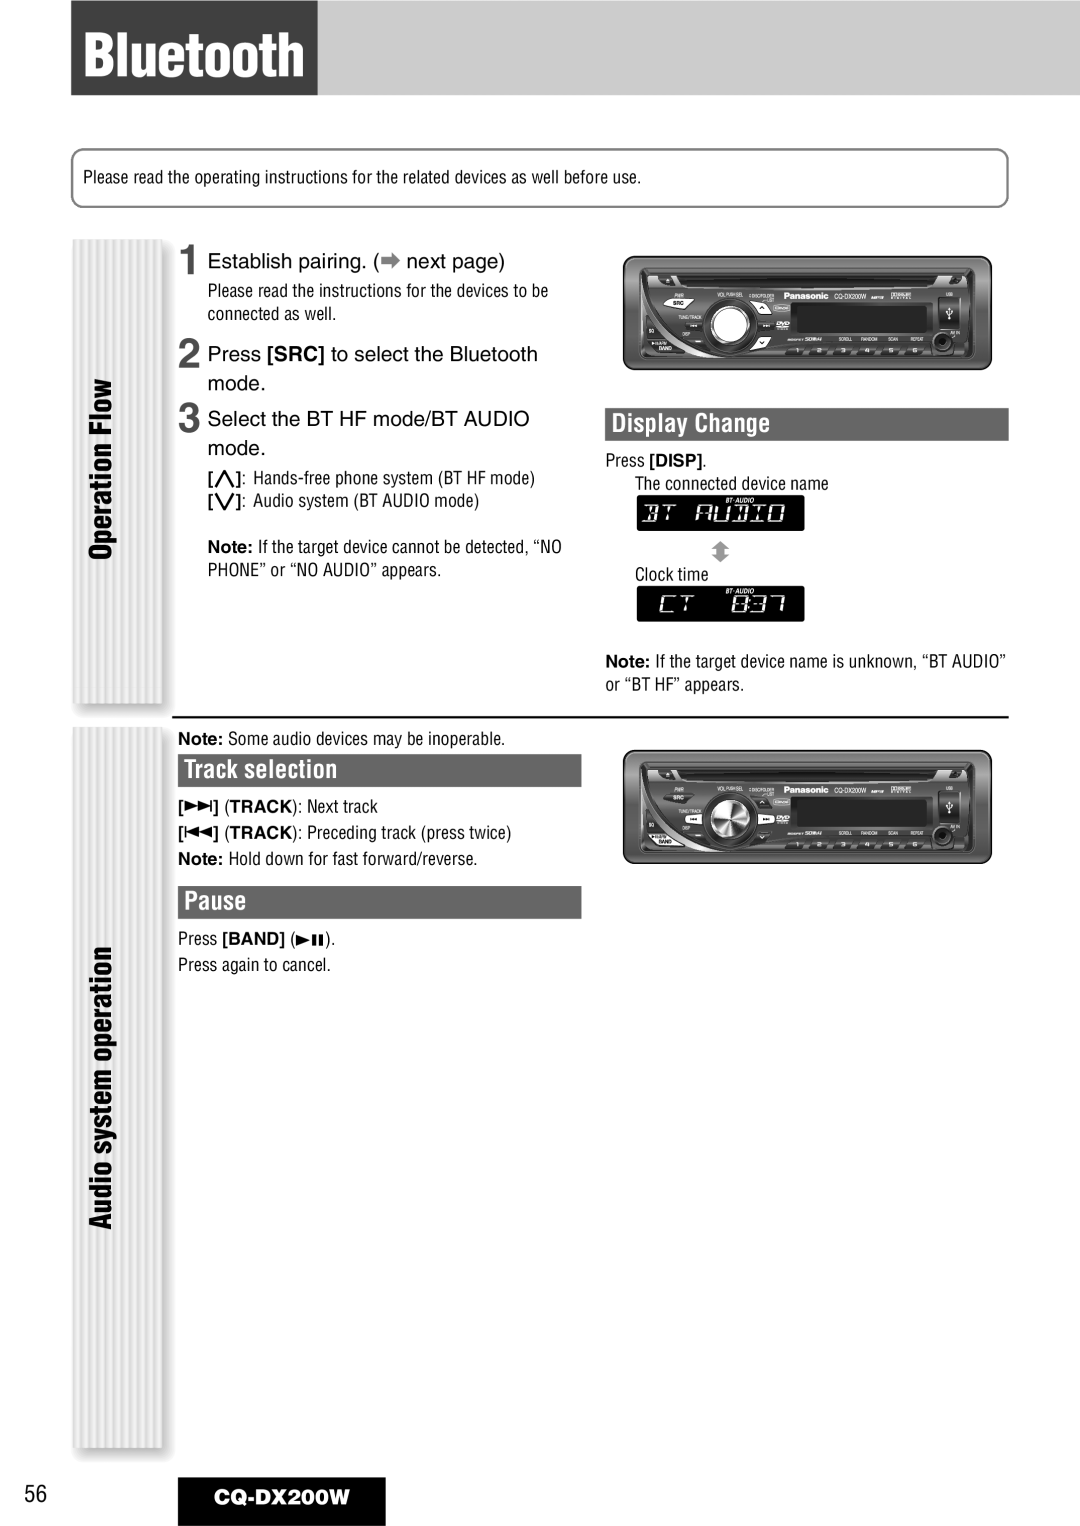 Panasonic CQ-DX200W Bluetooth, Flow, Operation, Display Change, Track selection, Pause, Establish pairing. a next page 